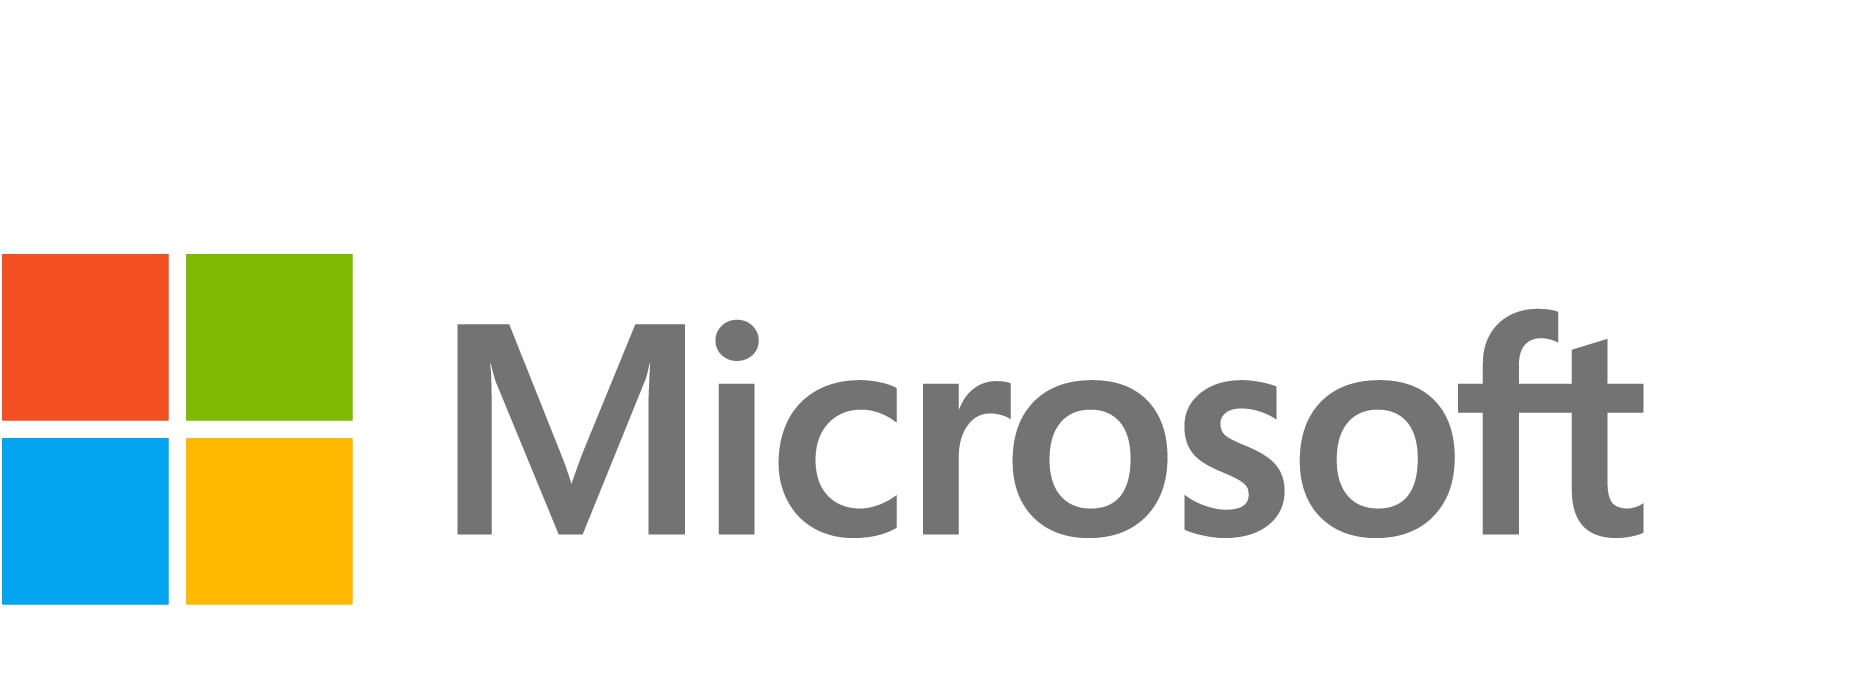 Microsoft Dynamics 365 for Customer Service - software assurance - 1 device CAL